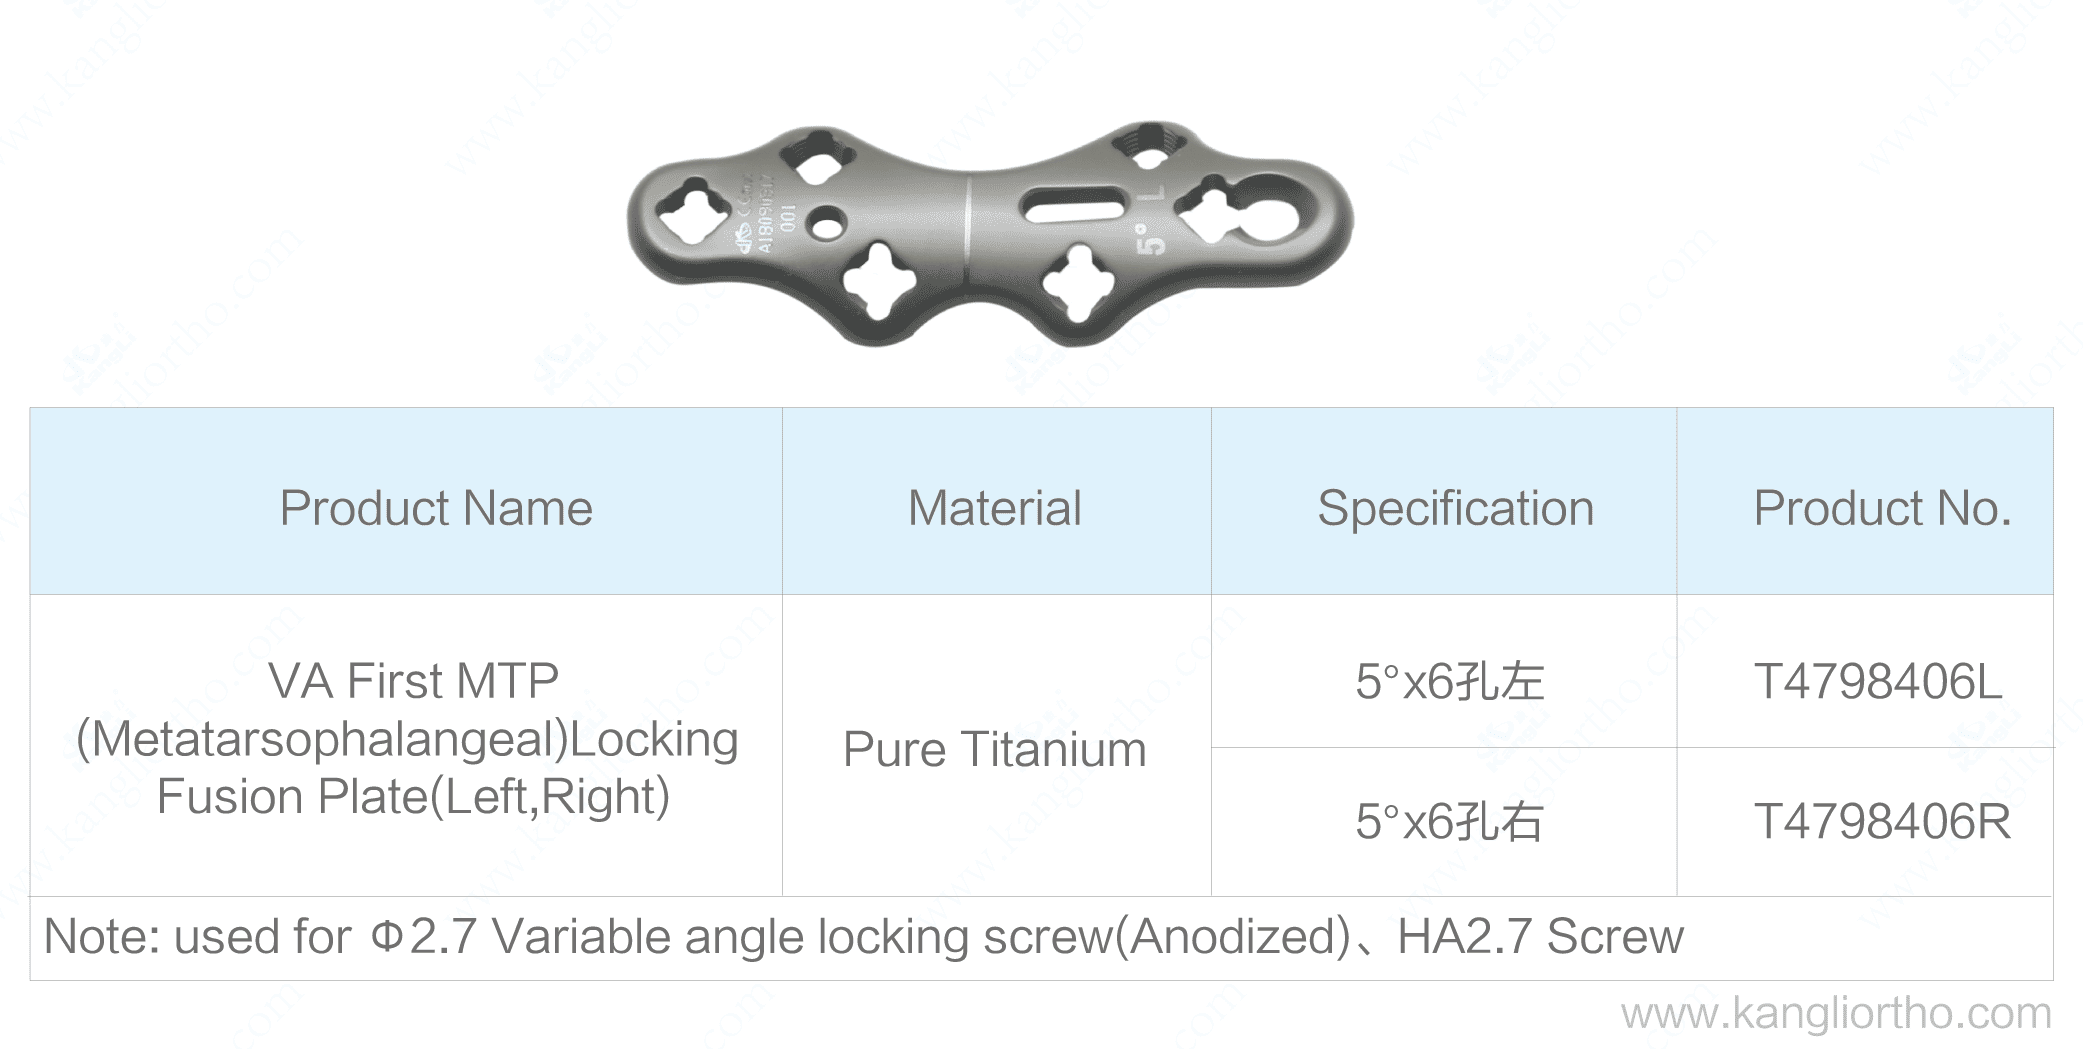 va-first-mtp-metatarsophalangeal-locking-fusion-plate-specifications